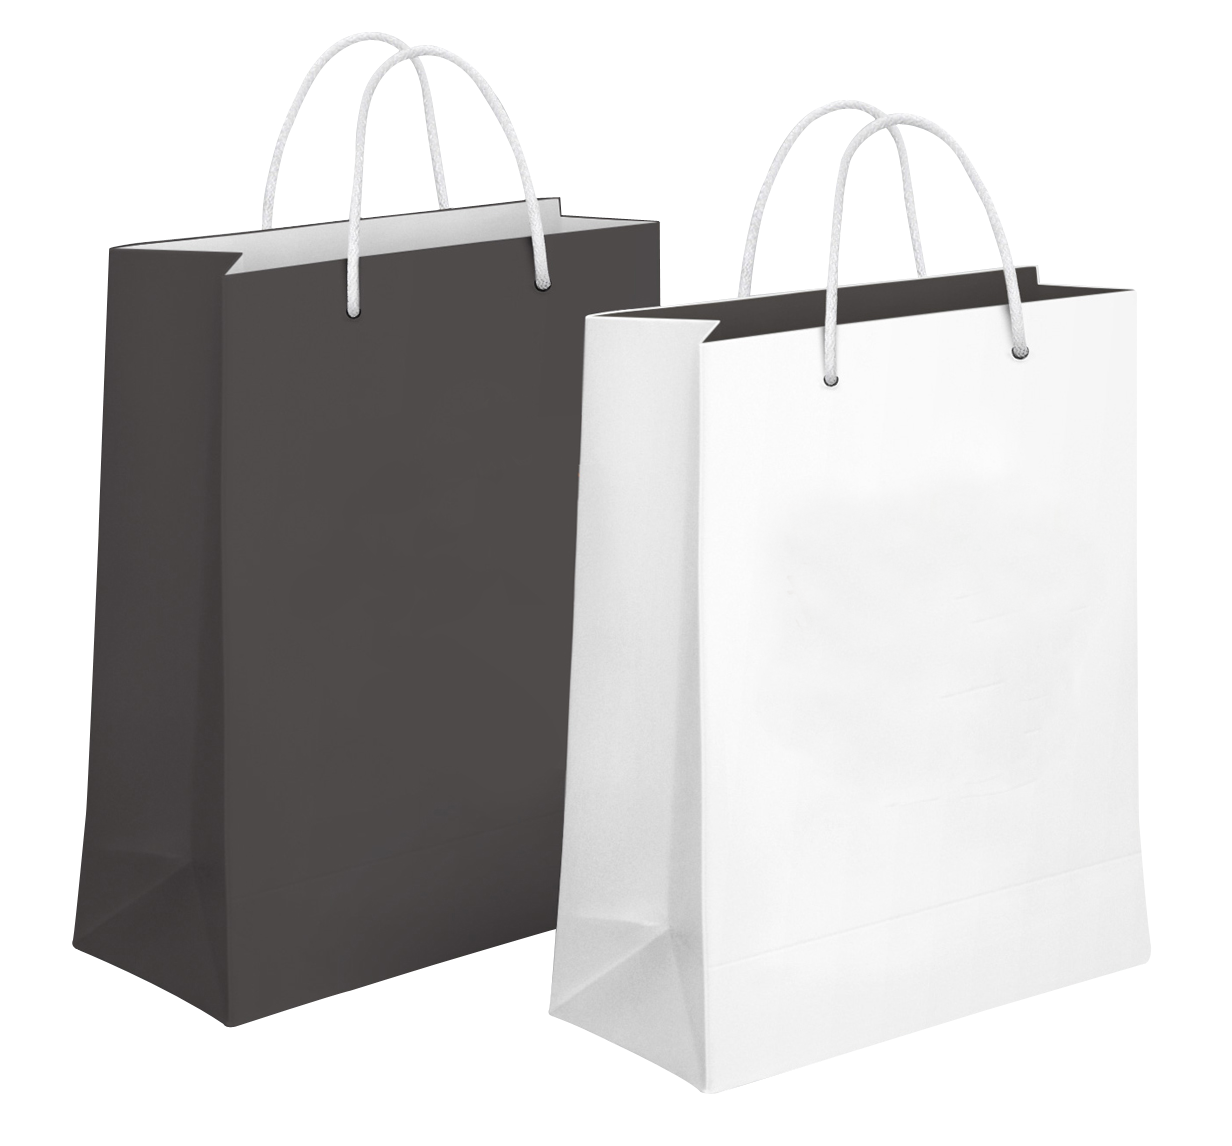 Shopping Bag PNG Images Transparent Free Download